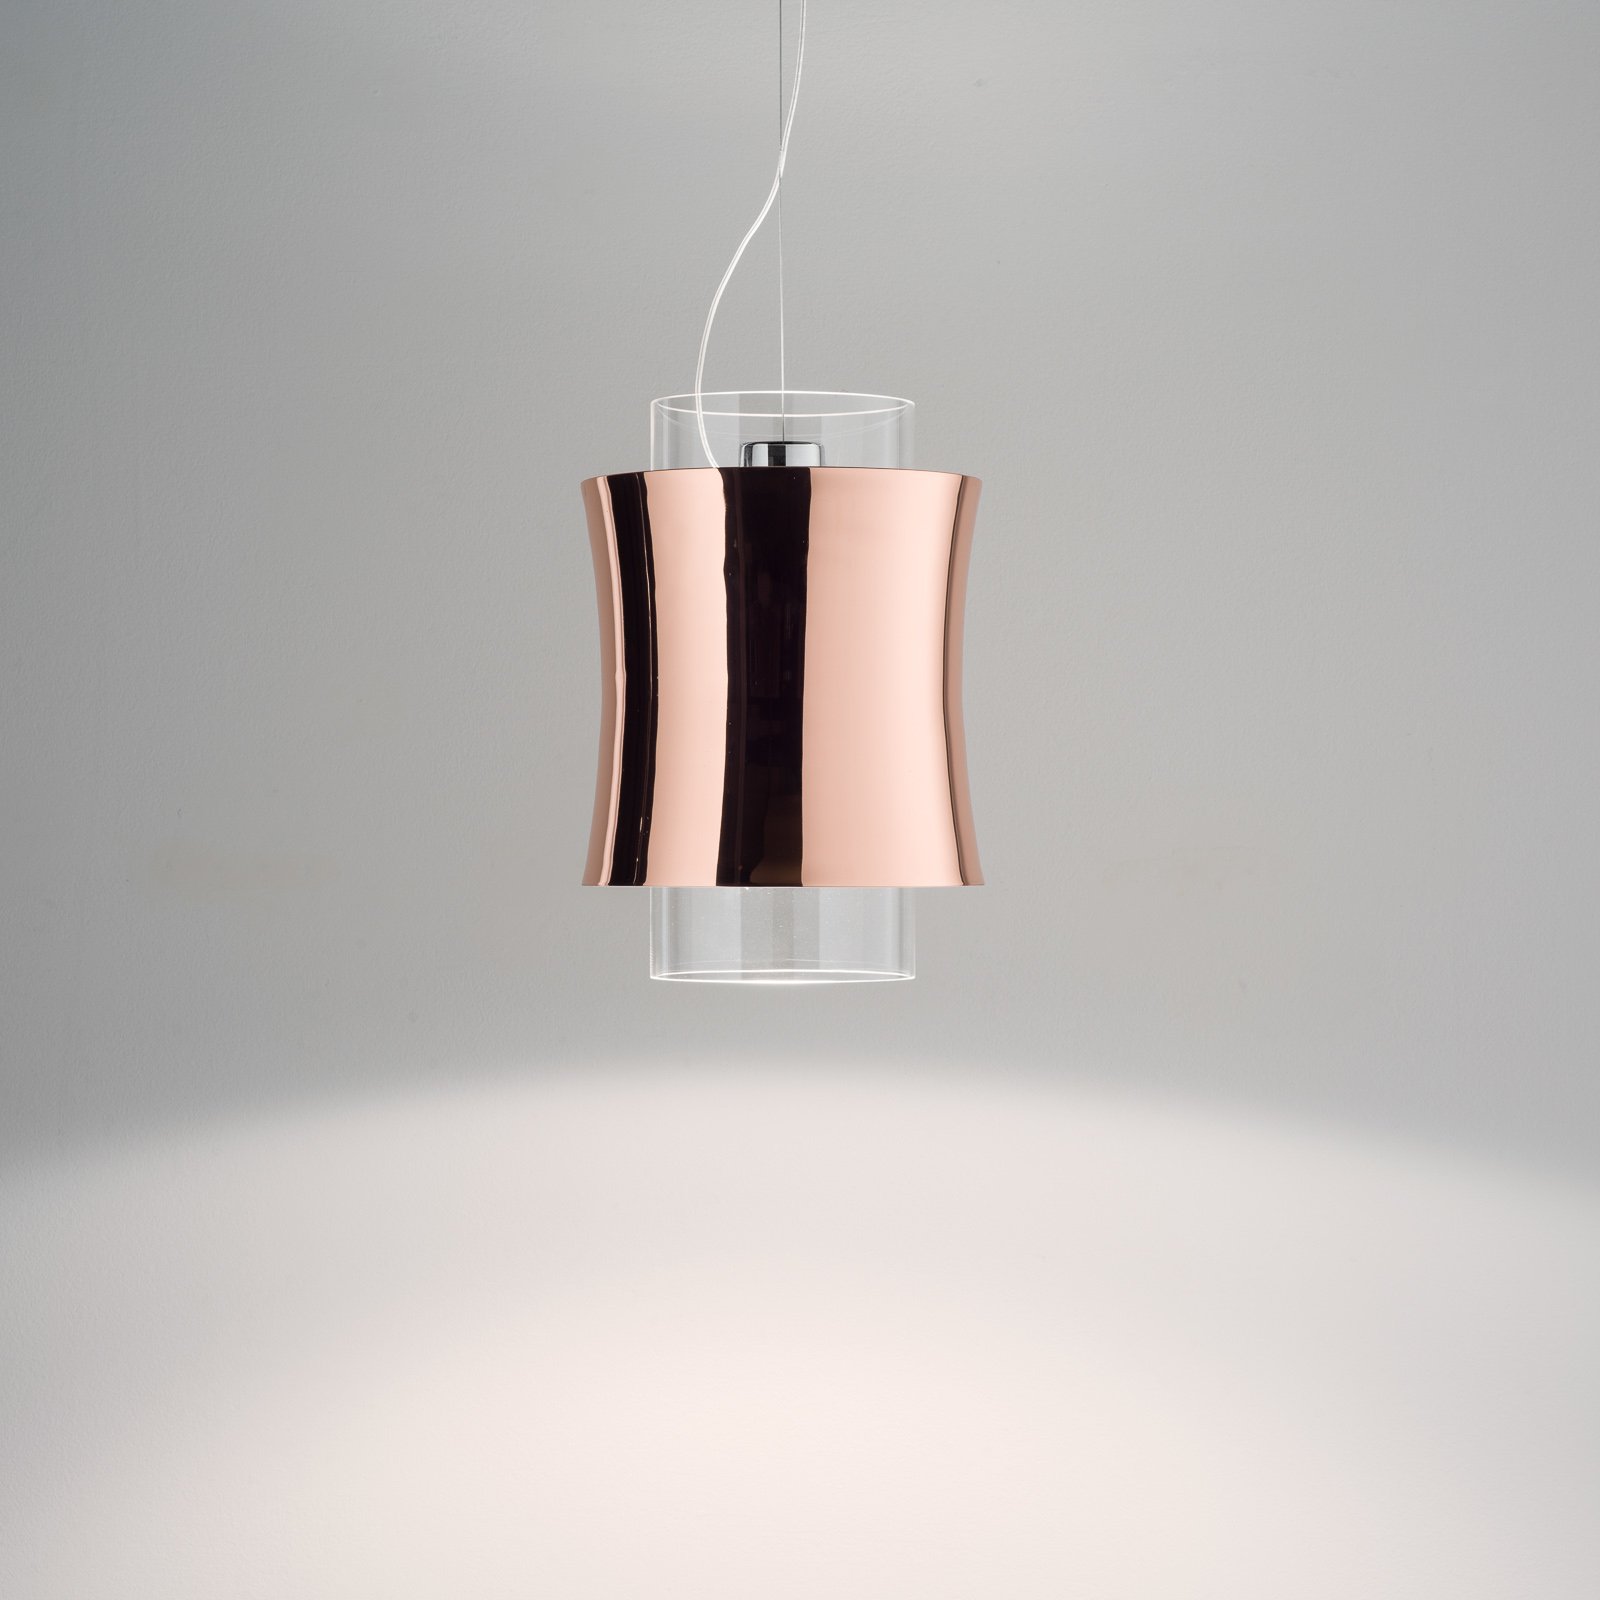 Prandina Fez S1 hanging light polished copper